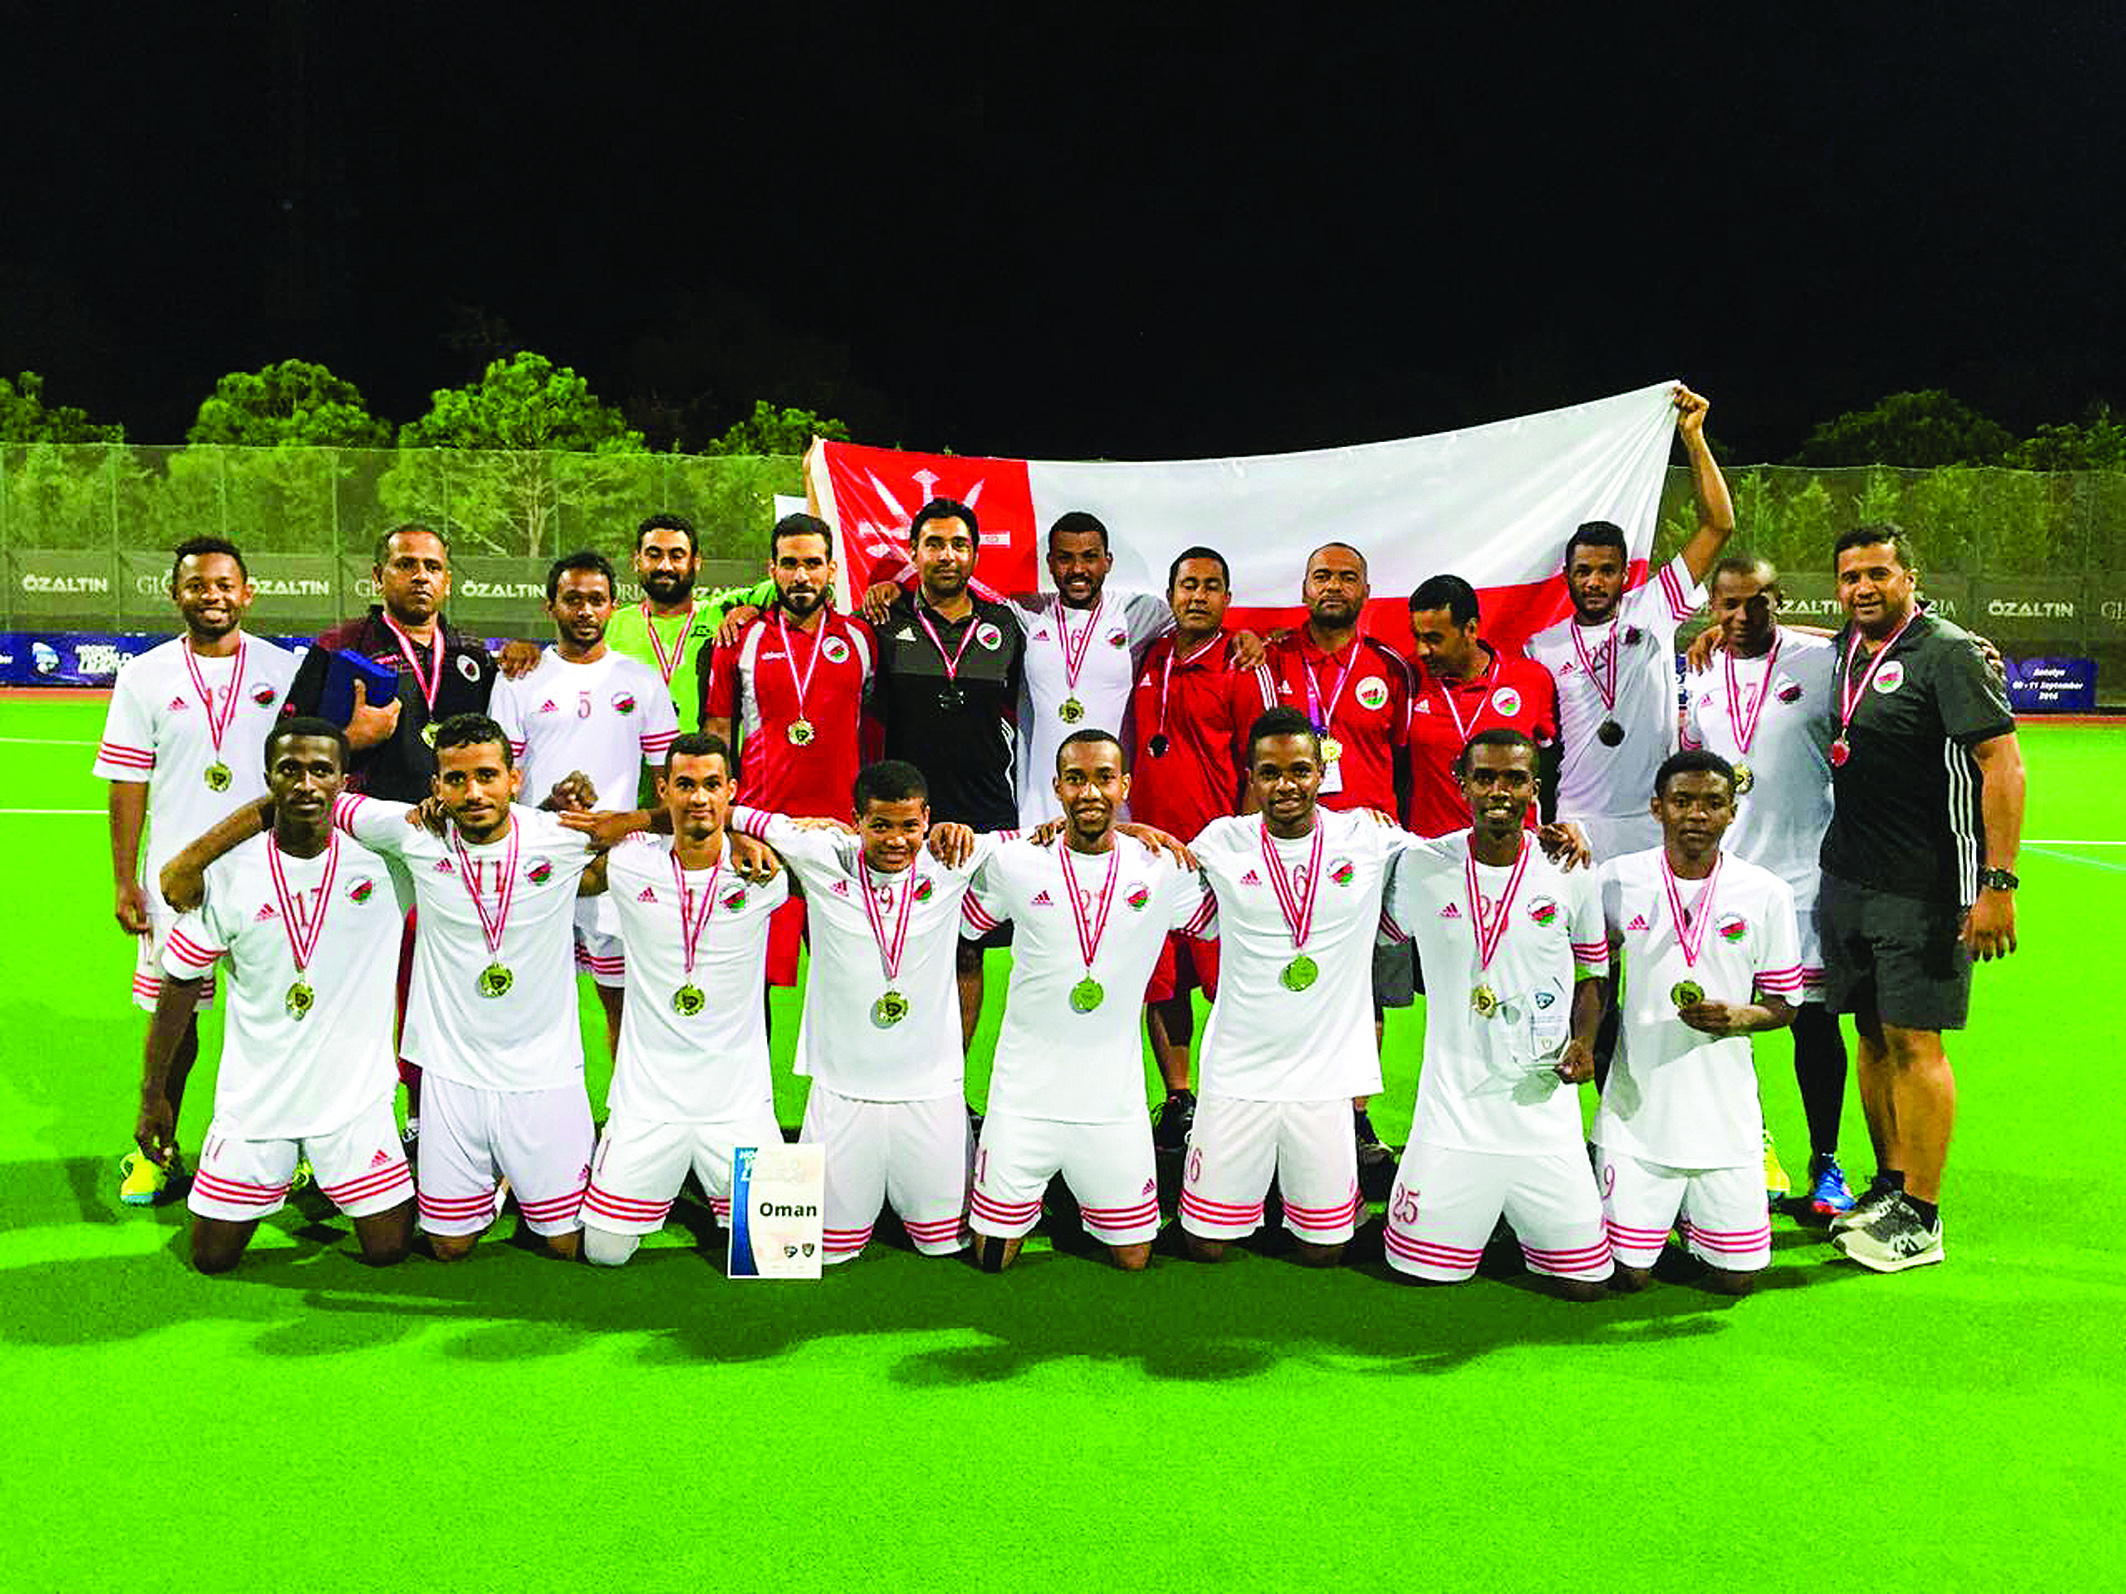 Oman qualify for FIH Hockey World League Round 2, gain direct entry